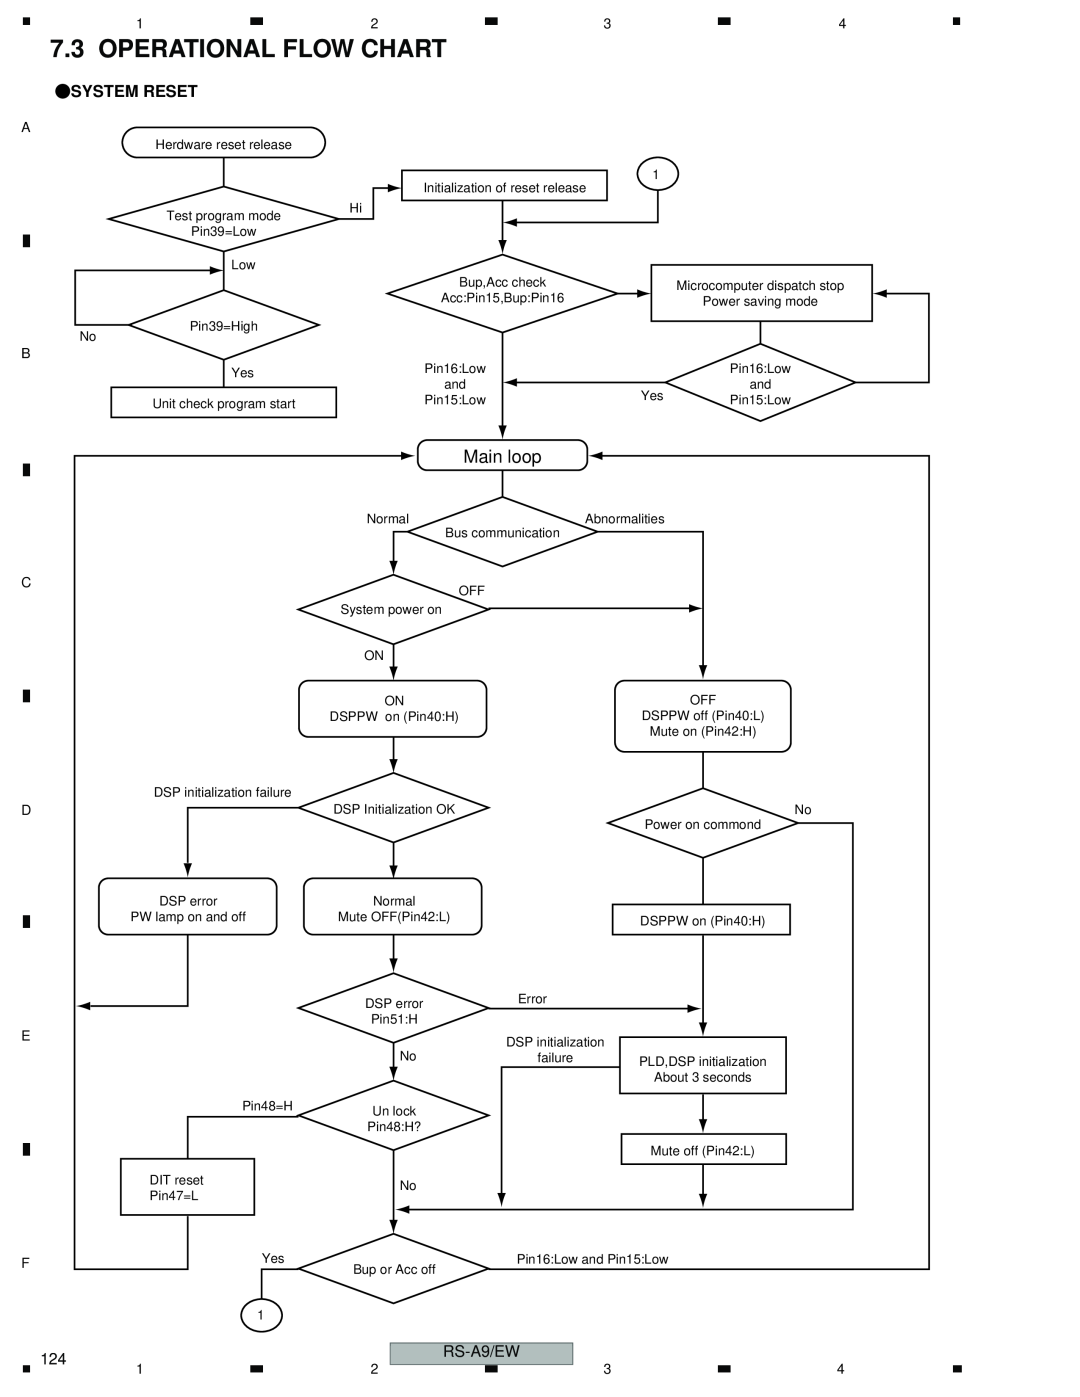 Pioneer RS-A9/EW manual Operational Flow Chart, Main loop, Systemreset 